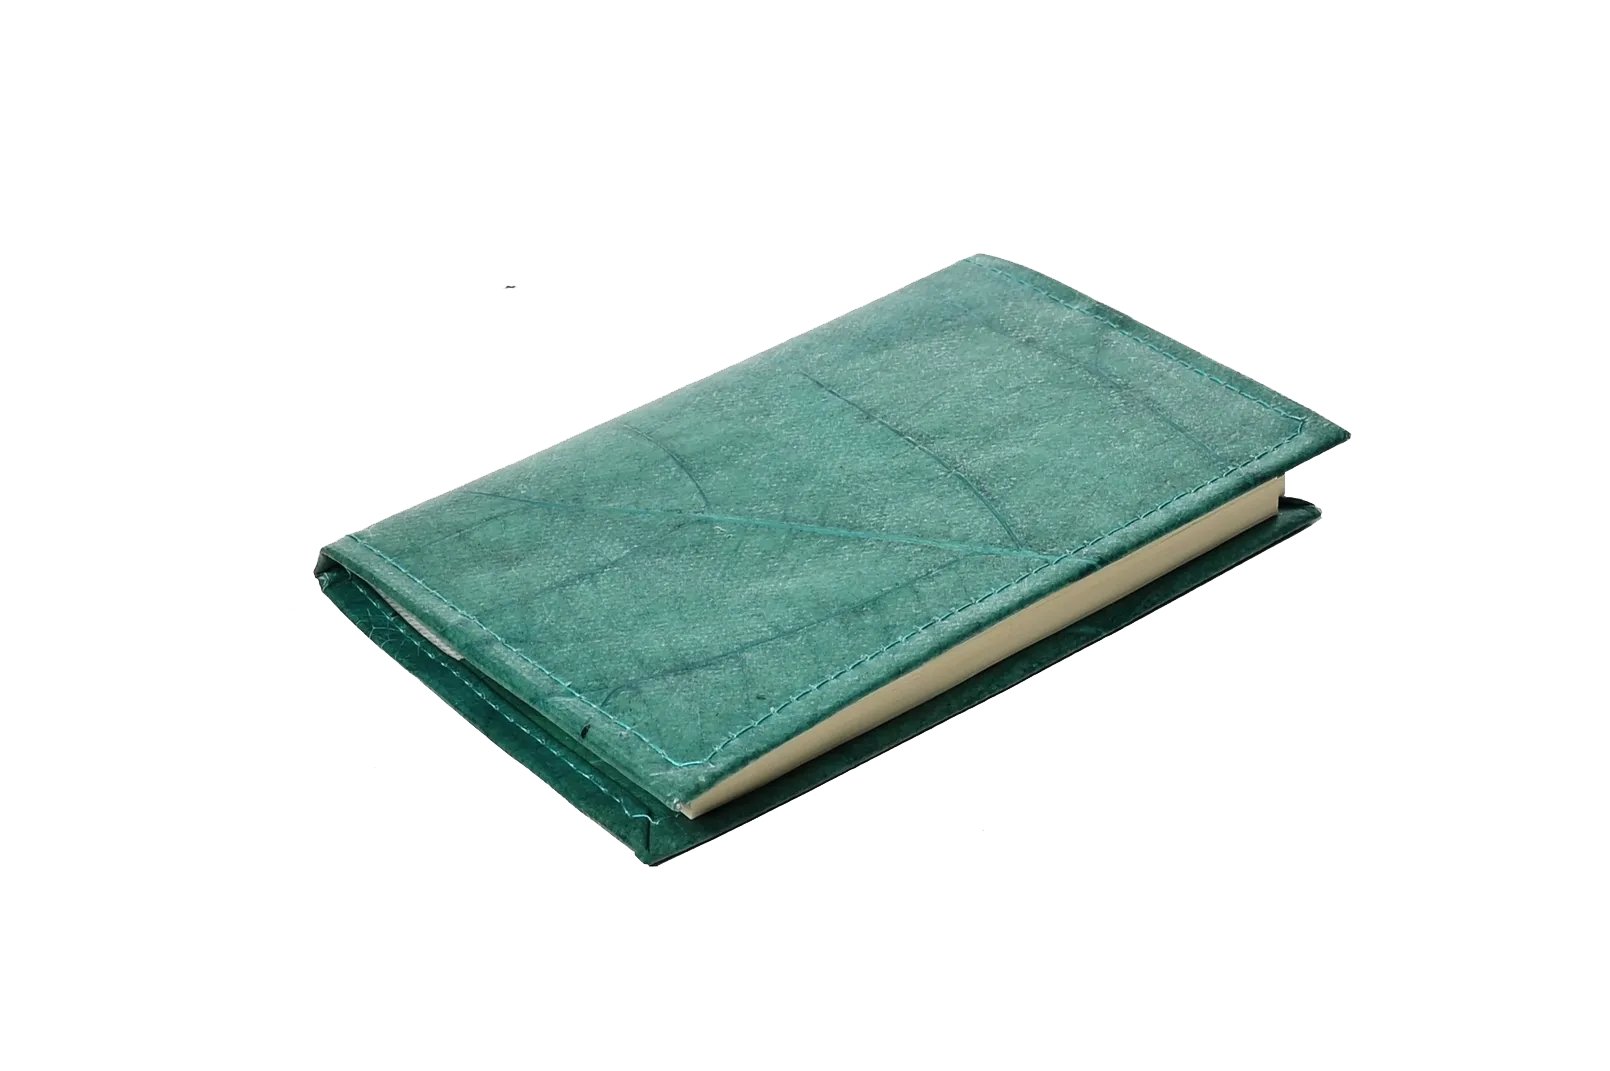 A6 Turquoise Notebook/Journal-Karuna Dawn-stride